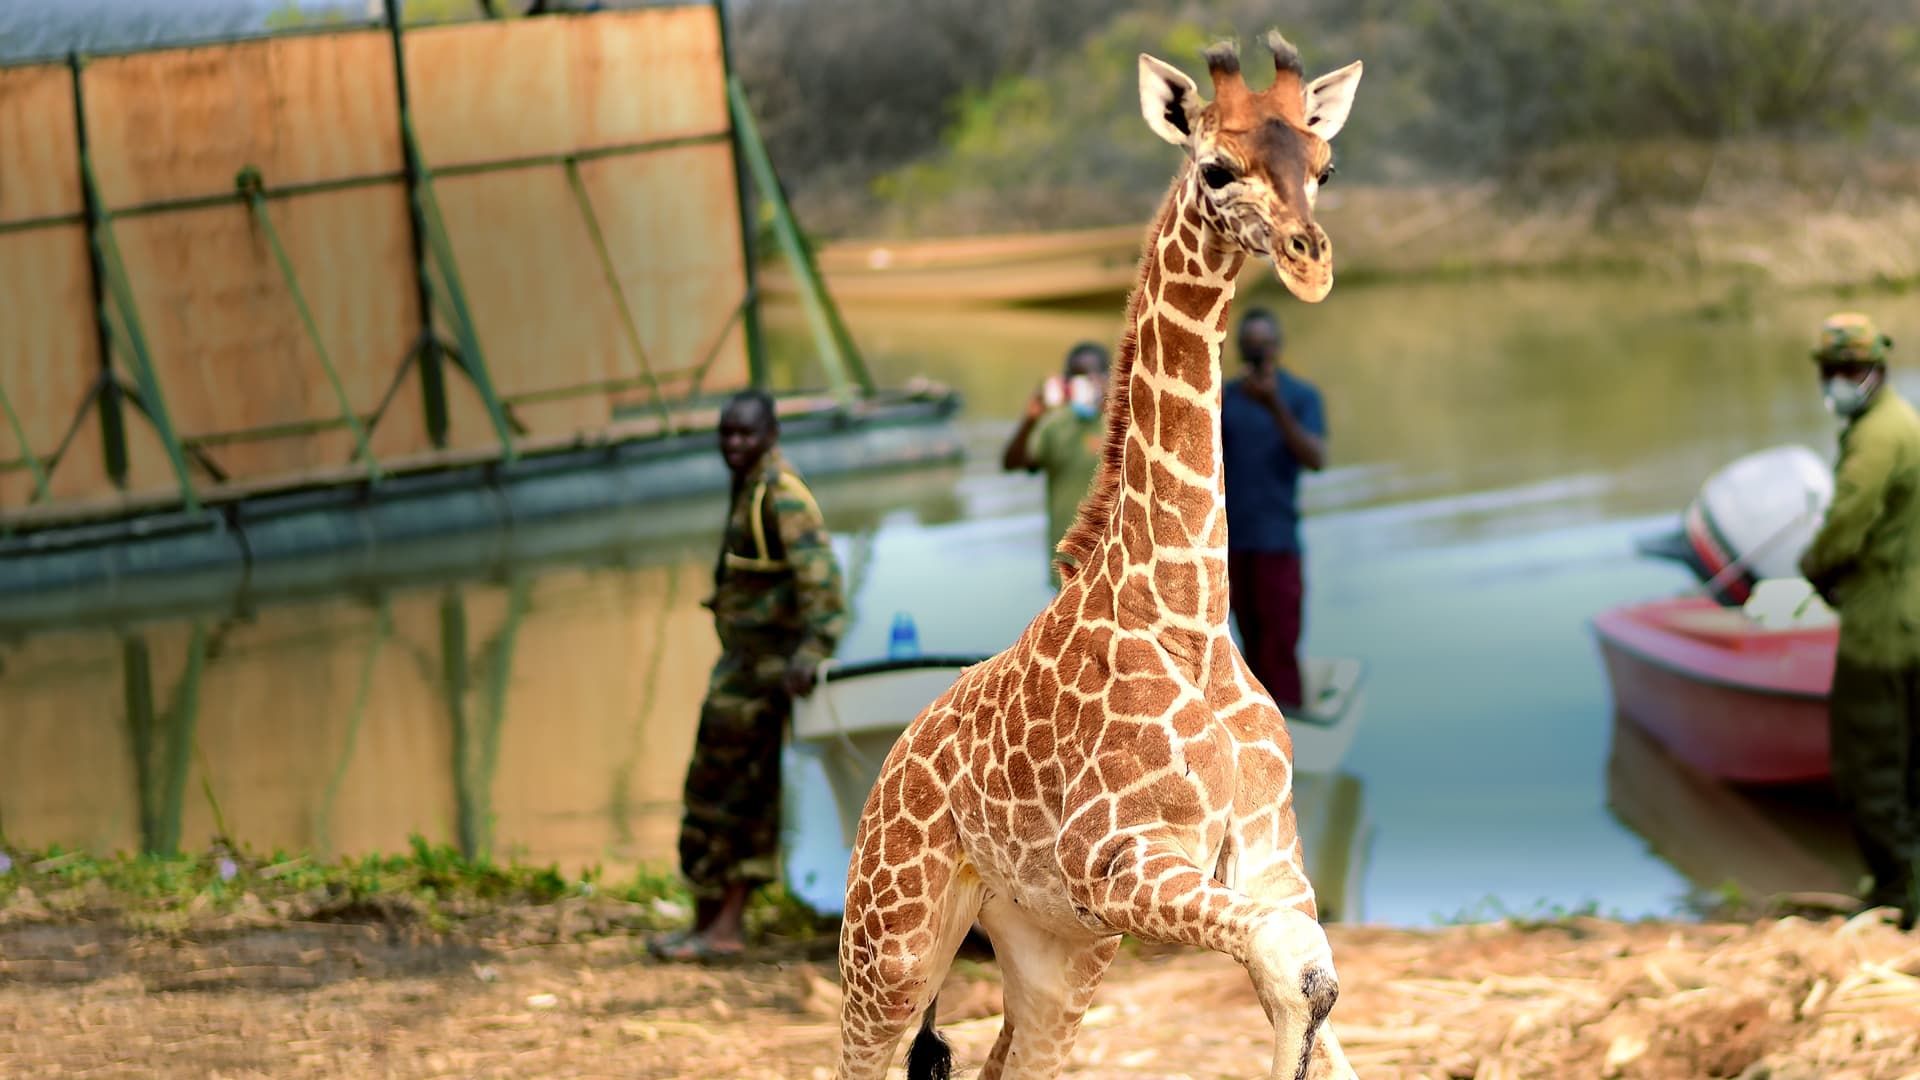 Saving Giraffes: The Long Journey Home background